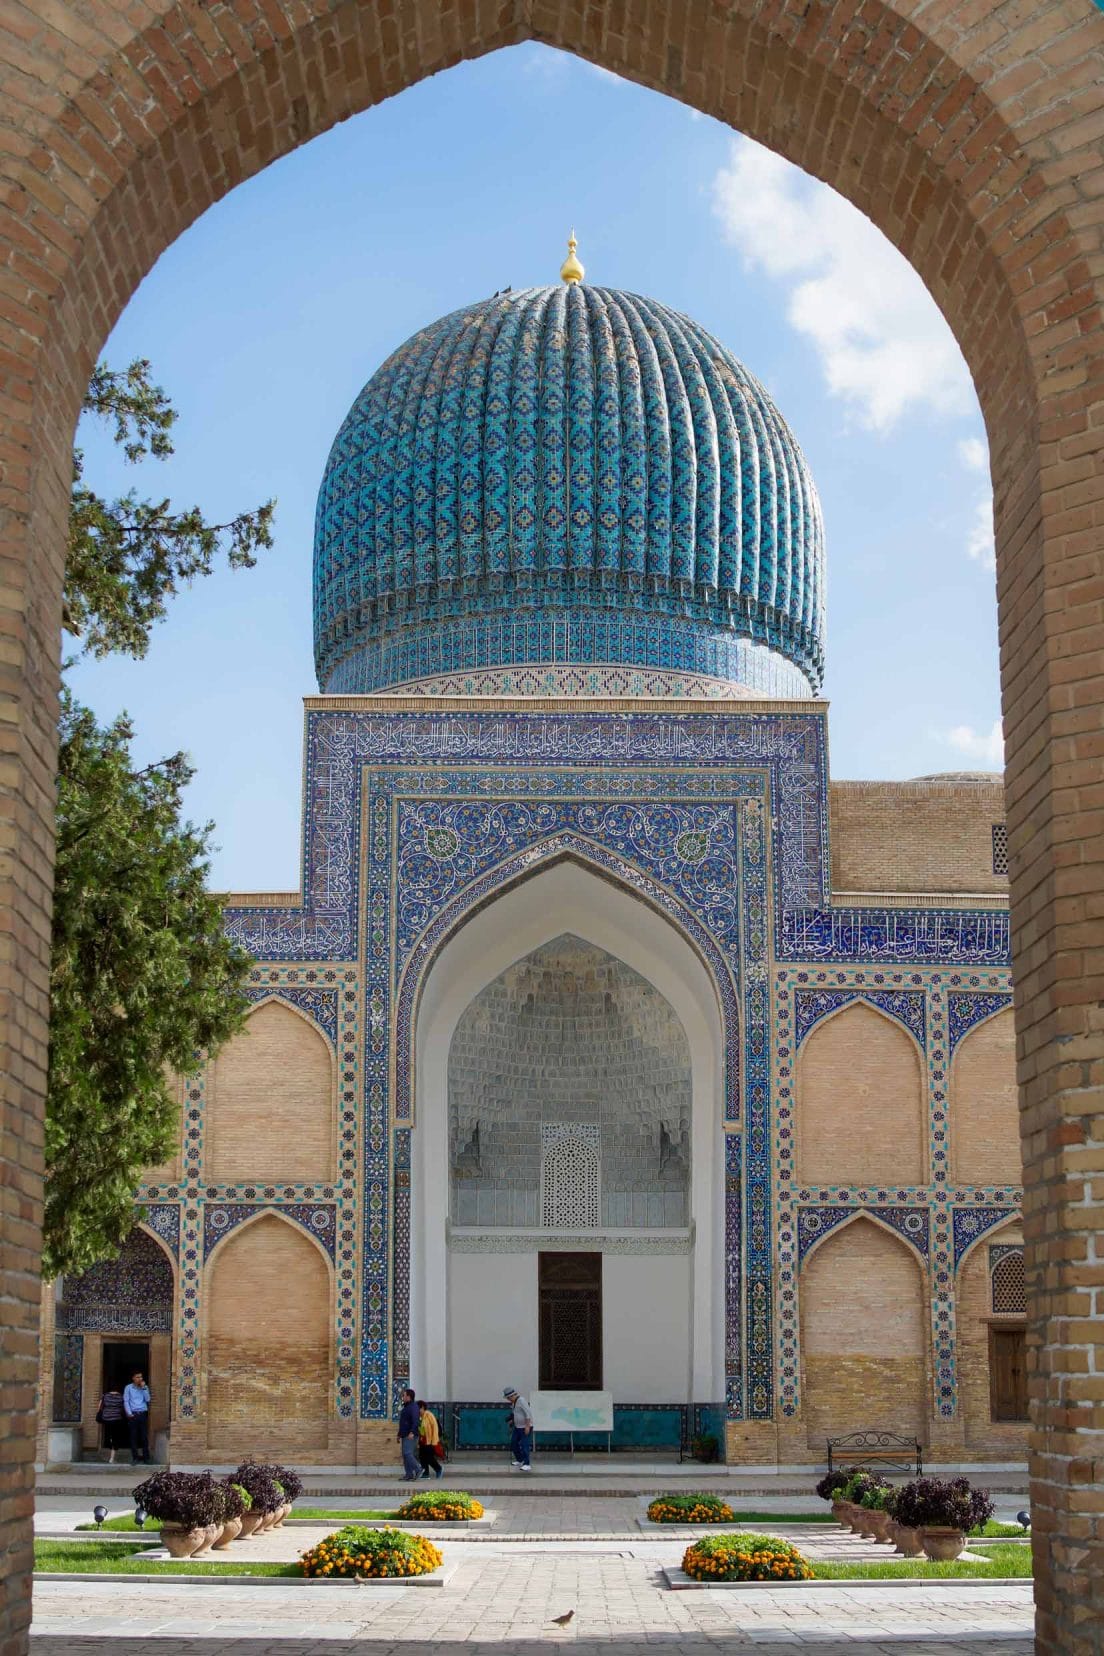 Amir-Temur-mausoleum-entrance, Samarkand